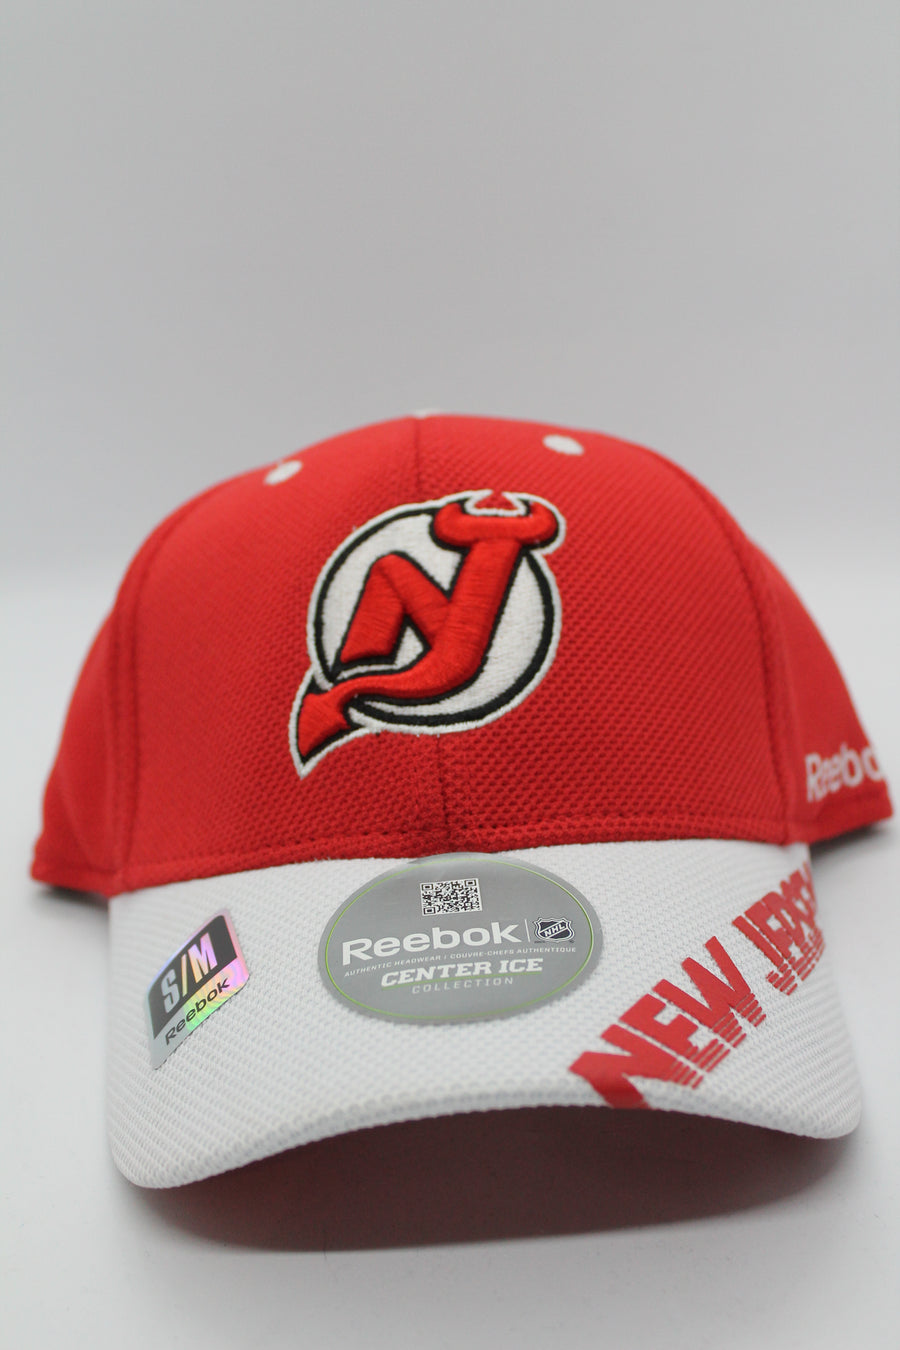 St. Louis Blues Hat Cap Authentic Center Ice Collection Reebok S NHL